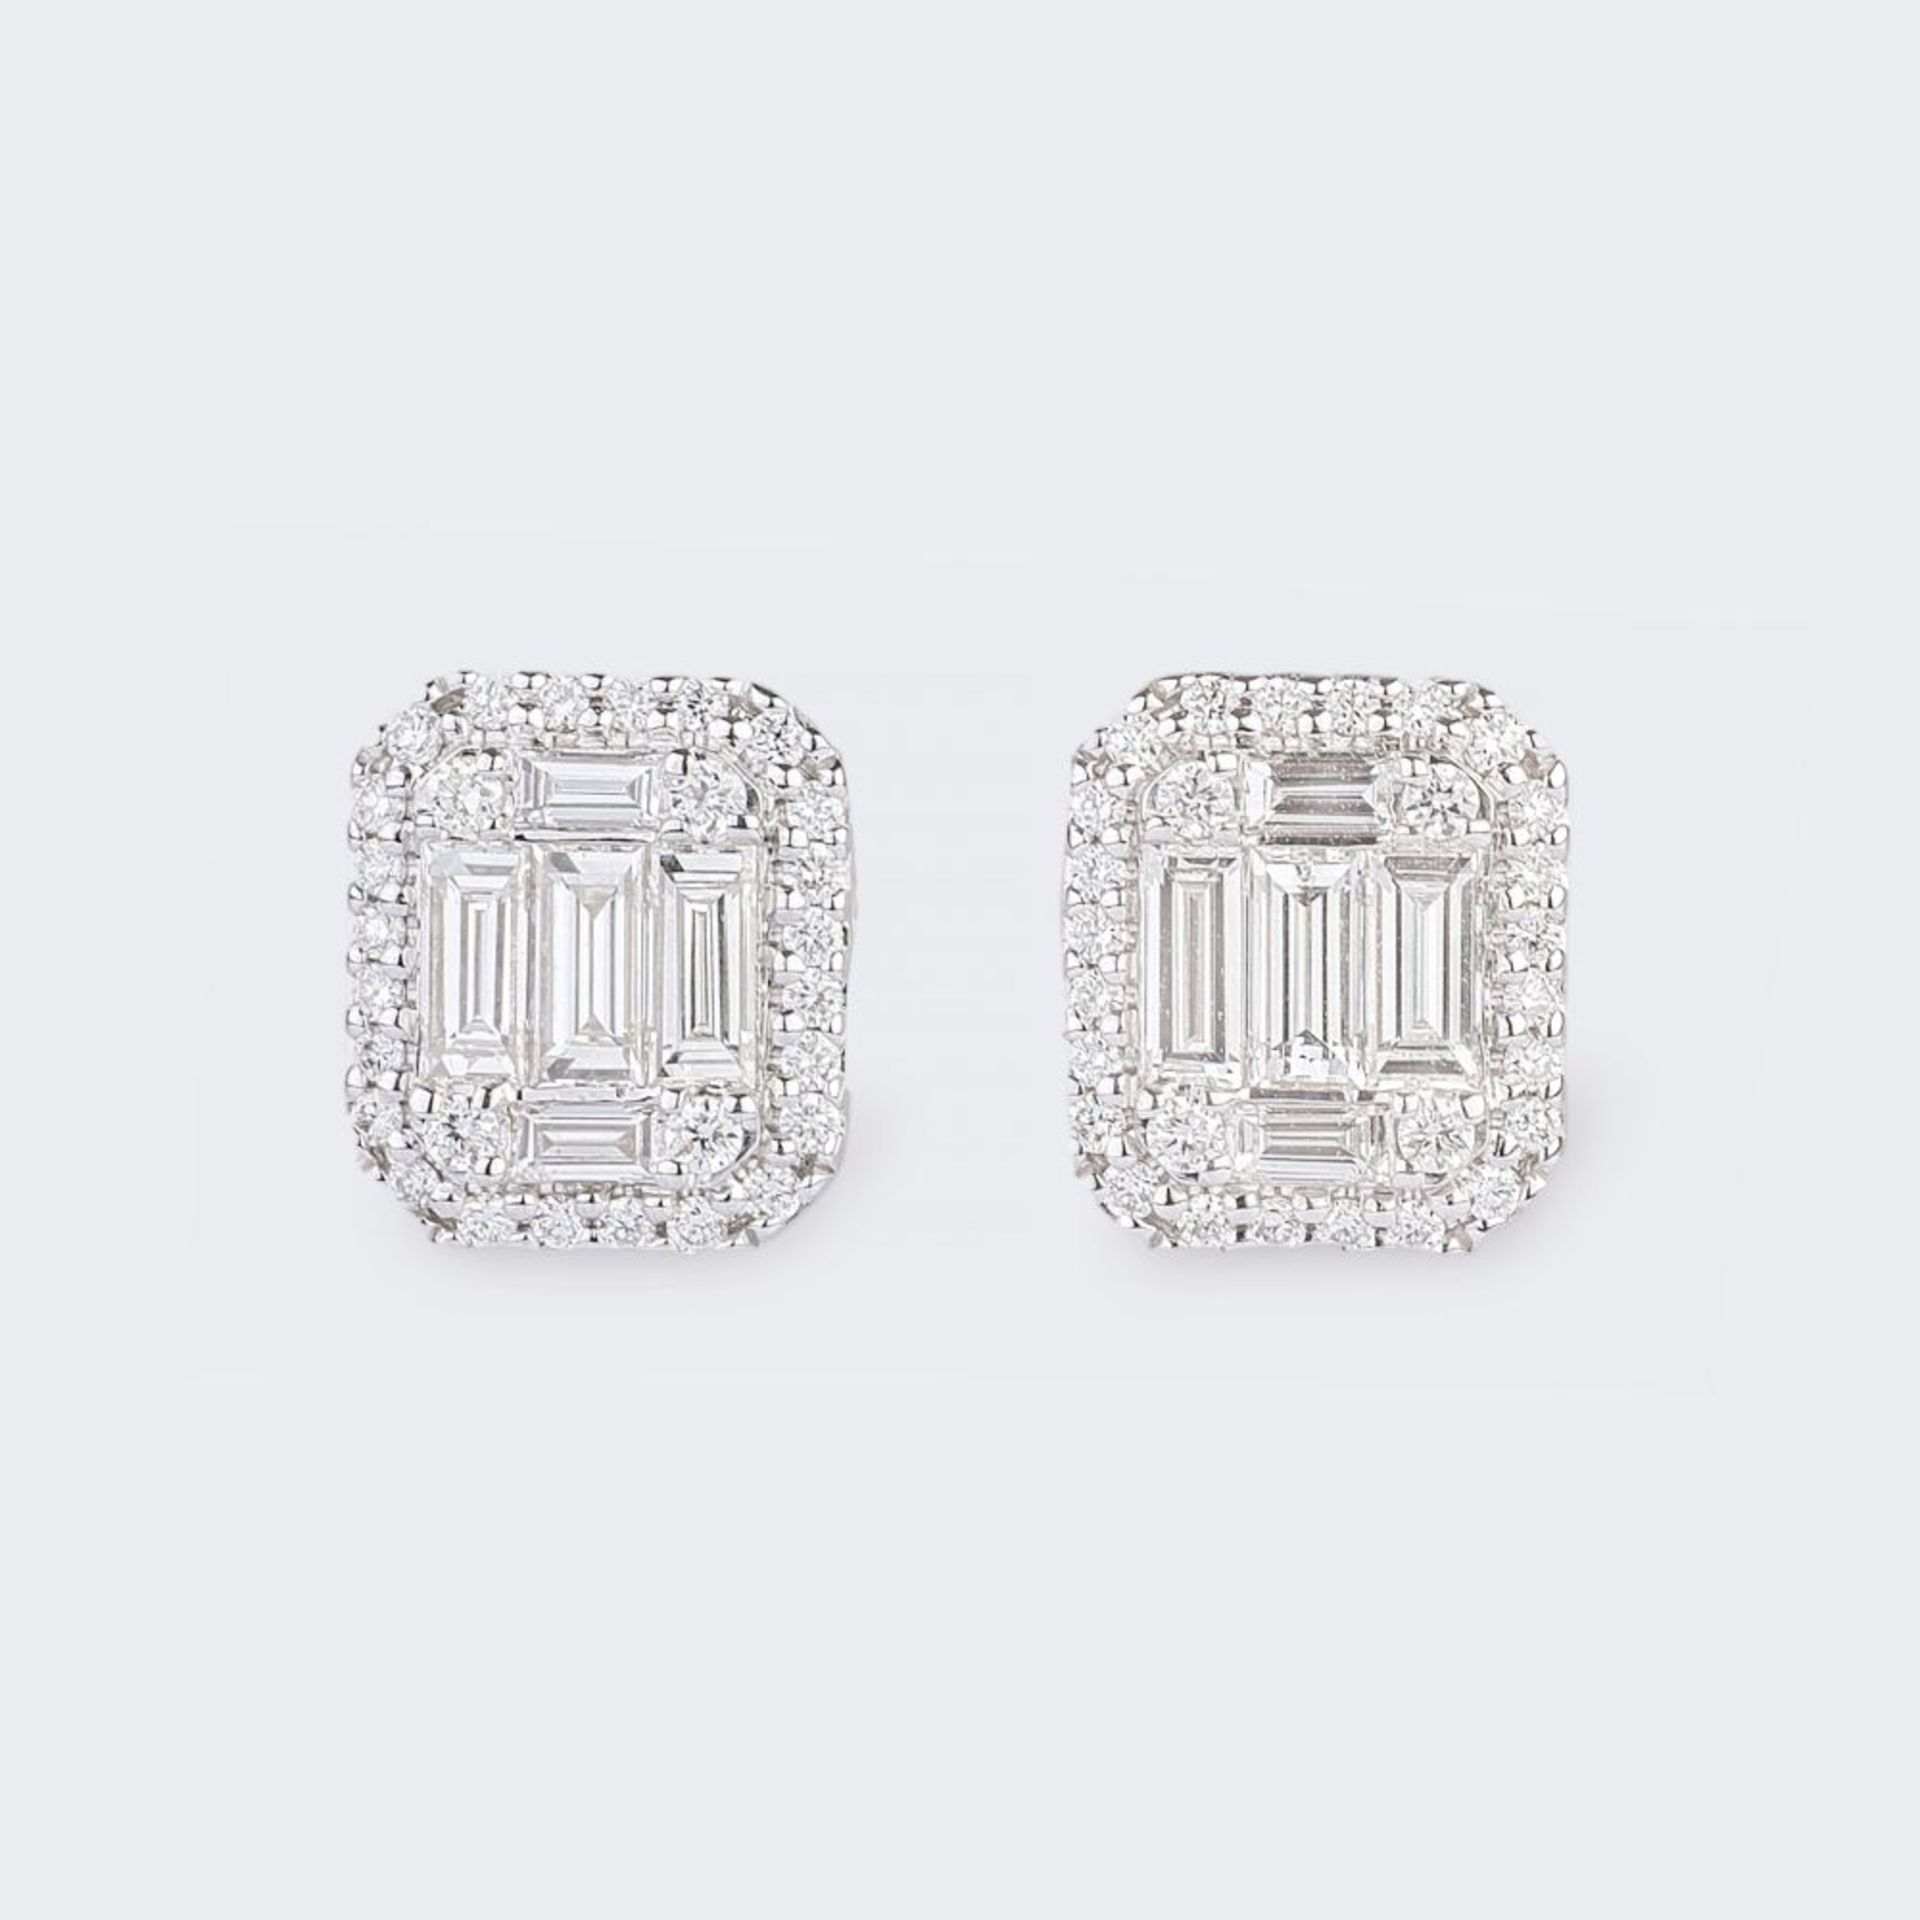 A Pair of Diamond Earstuds.